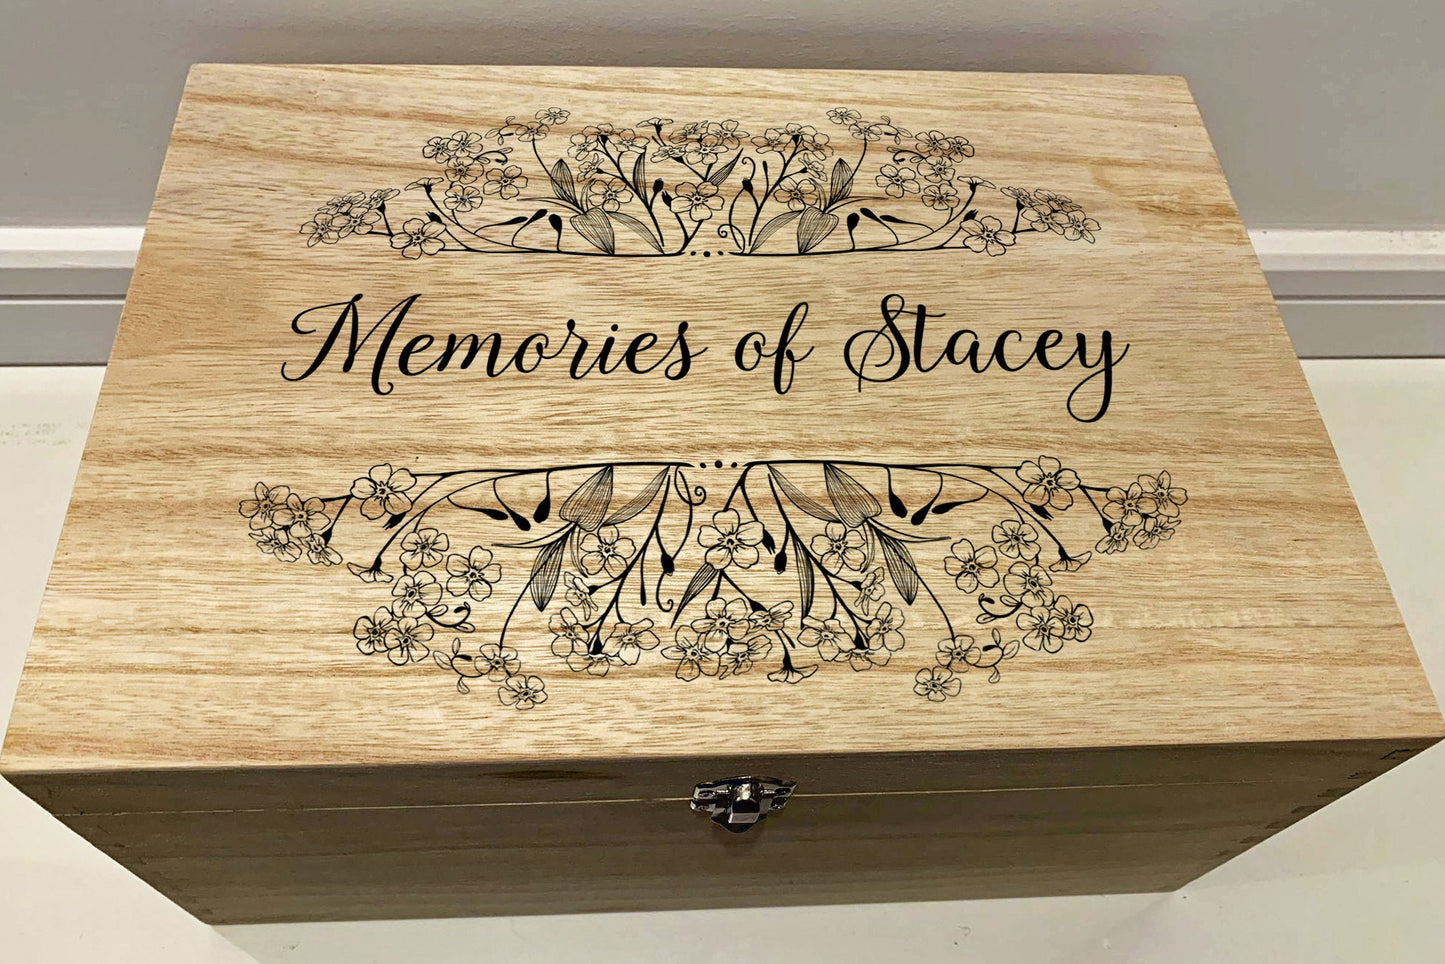 Large Personalised Engraved Wooden Loving Memories Bereavement Keepsake Box with Forget Me Not Flowers - Resplendent Aurora